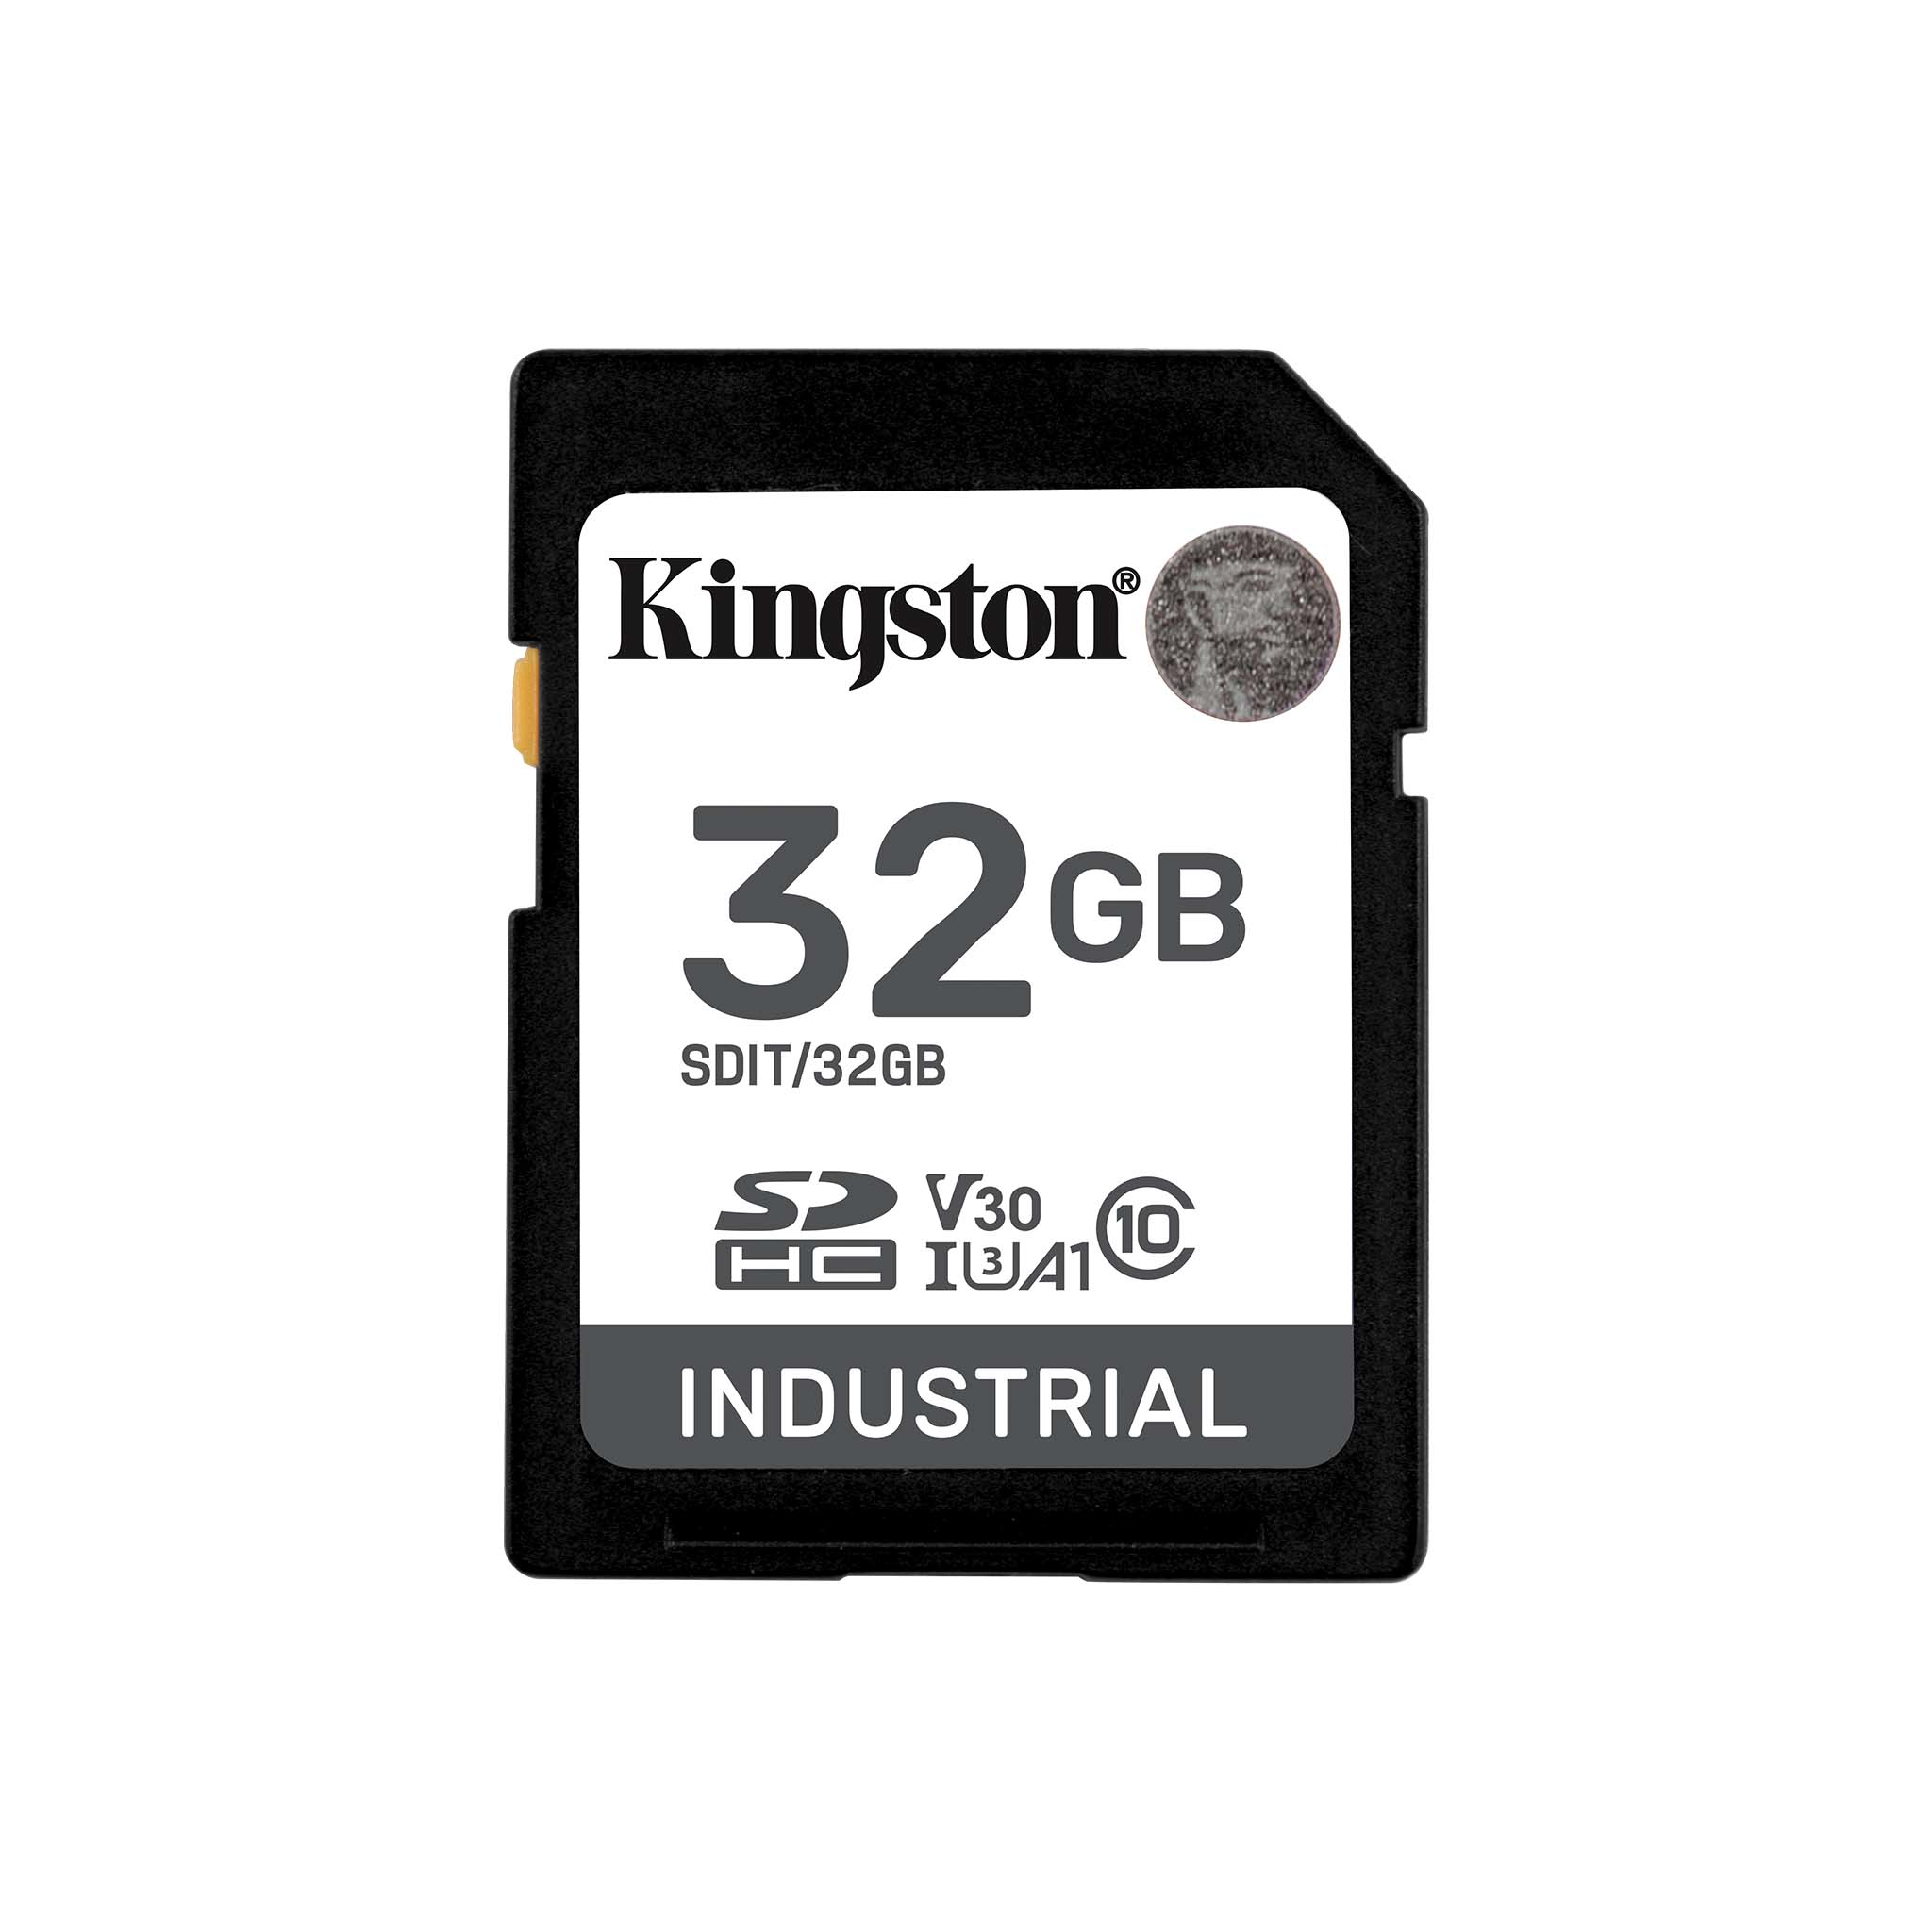 Kingston Technology SDIT/32GB